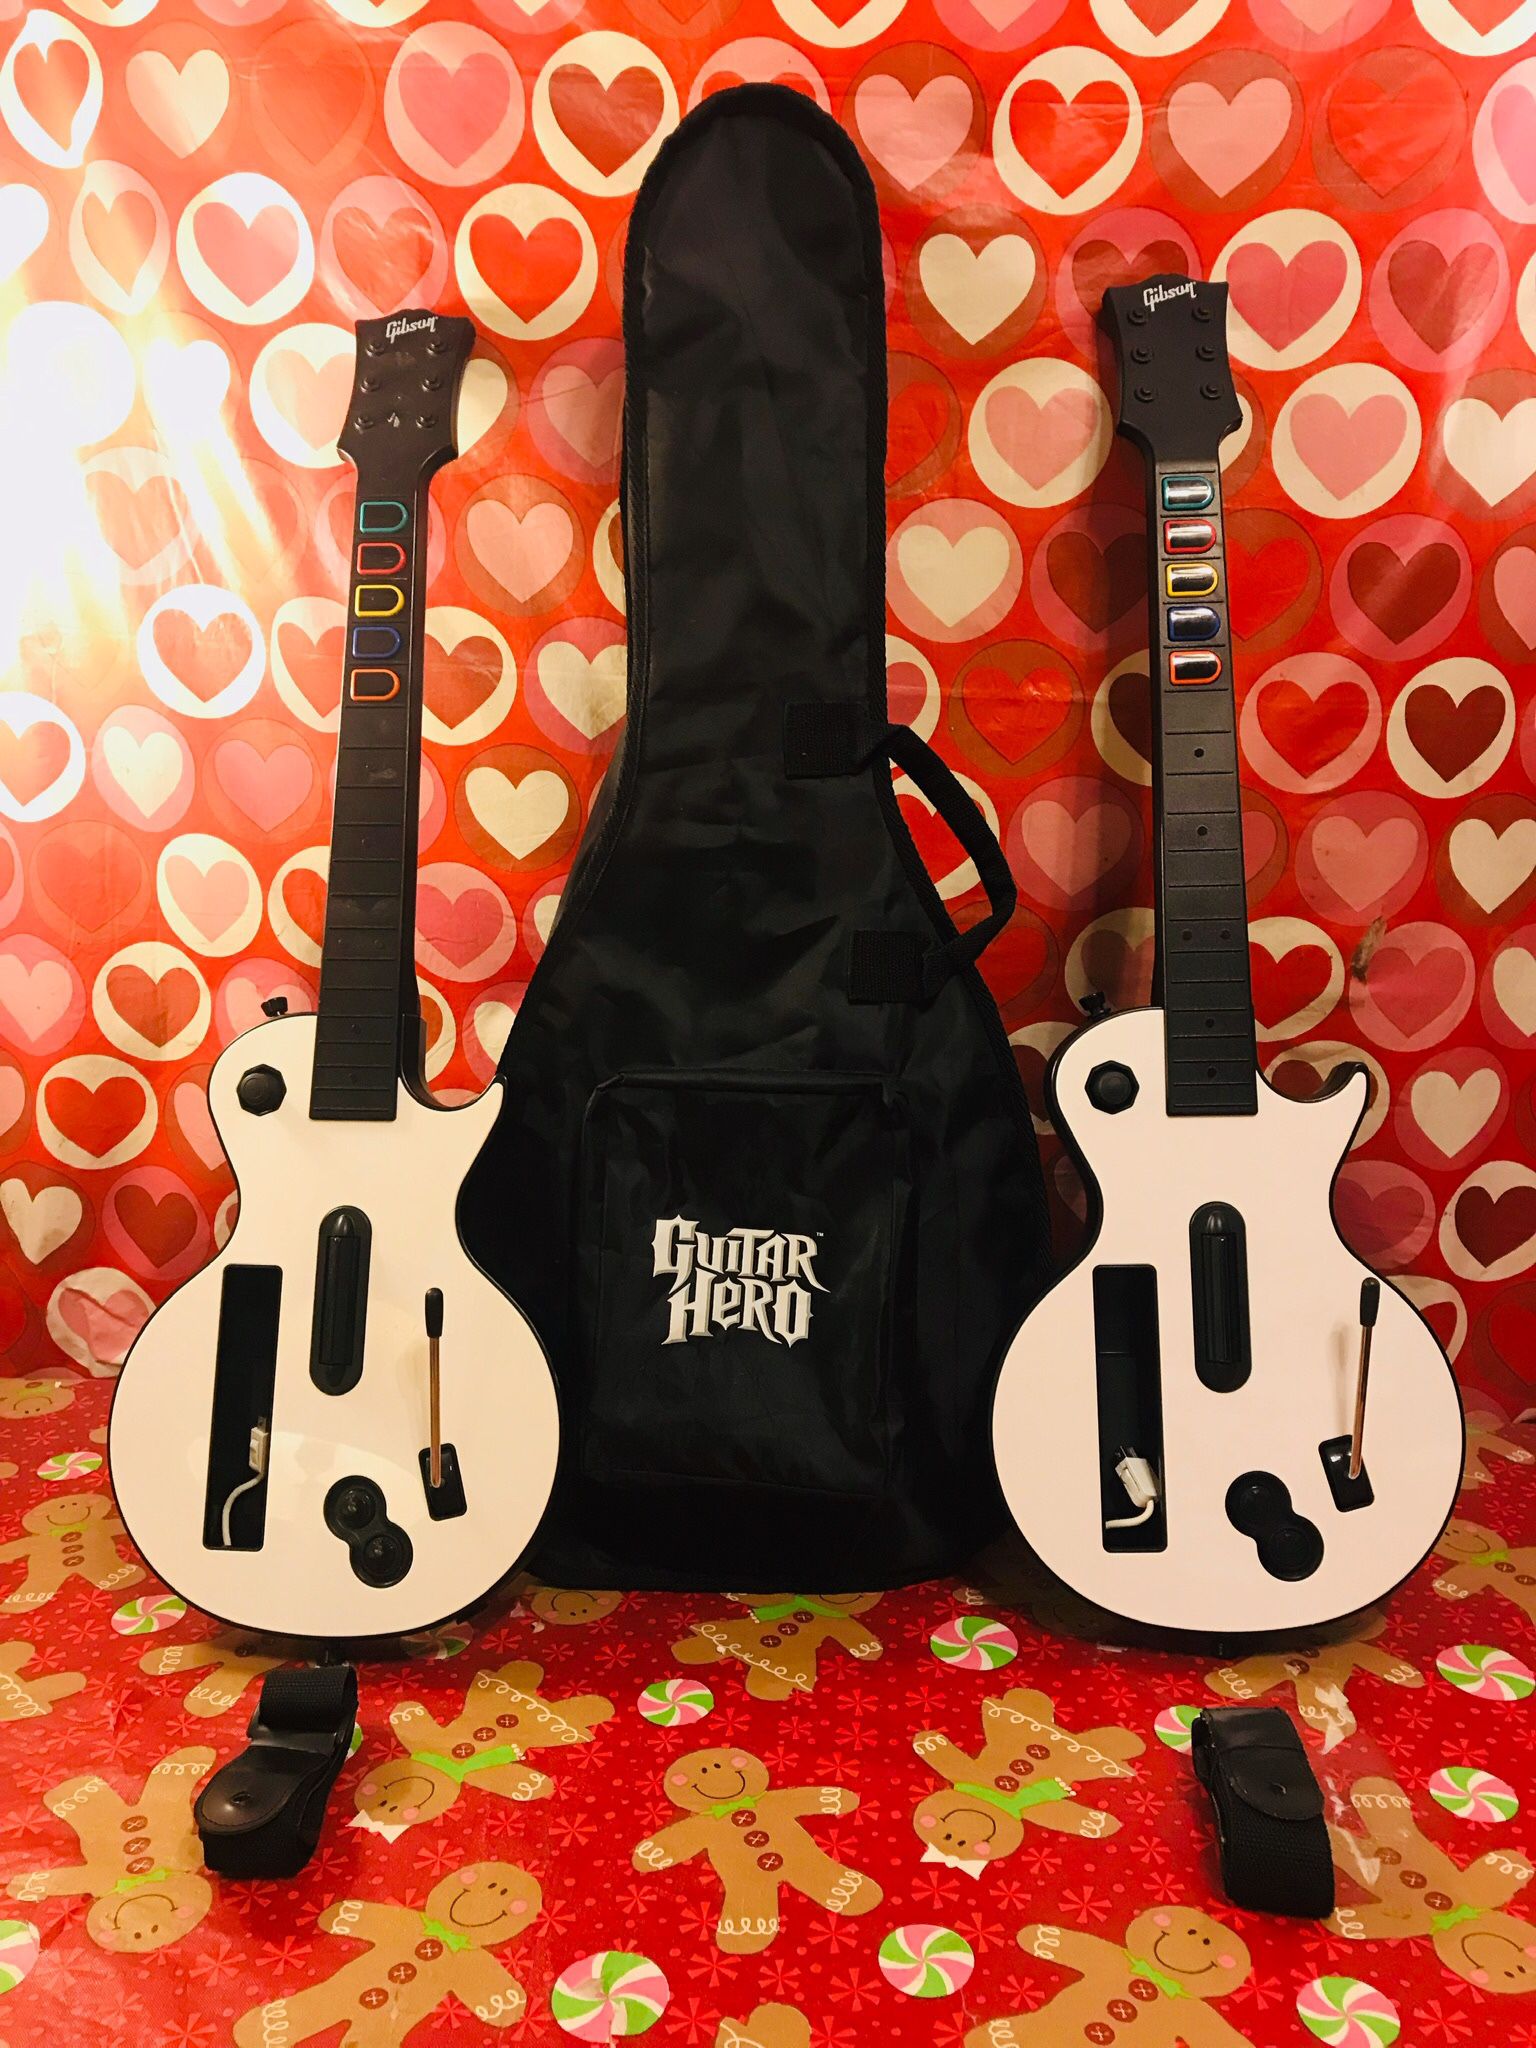 2 Nintendo Wii Rock Band Guitar Hero Gibson Official Guitars w/ Double Guitar Carrying Case $100